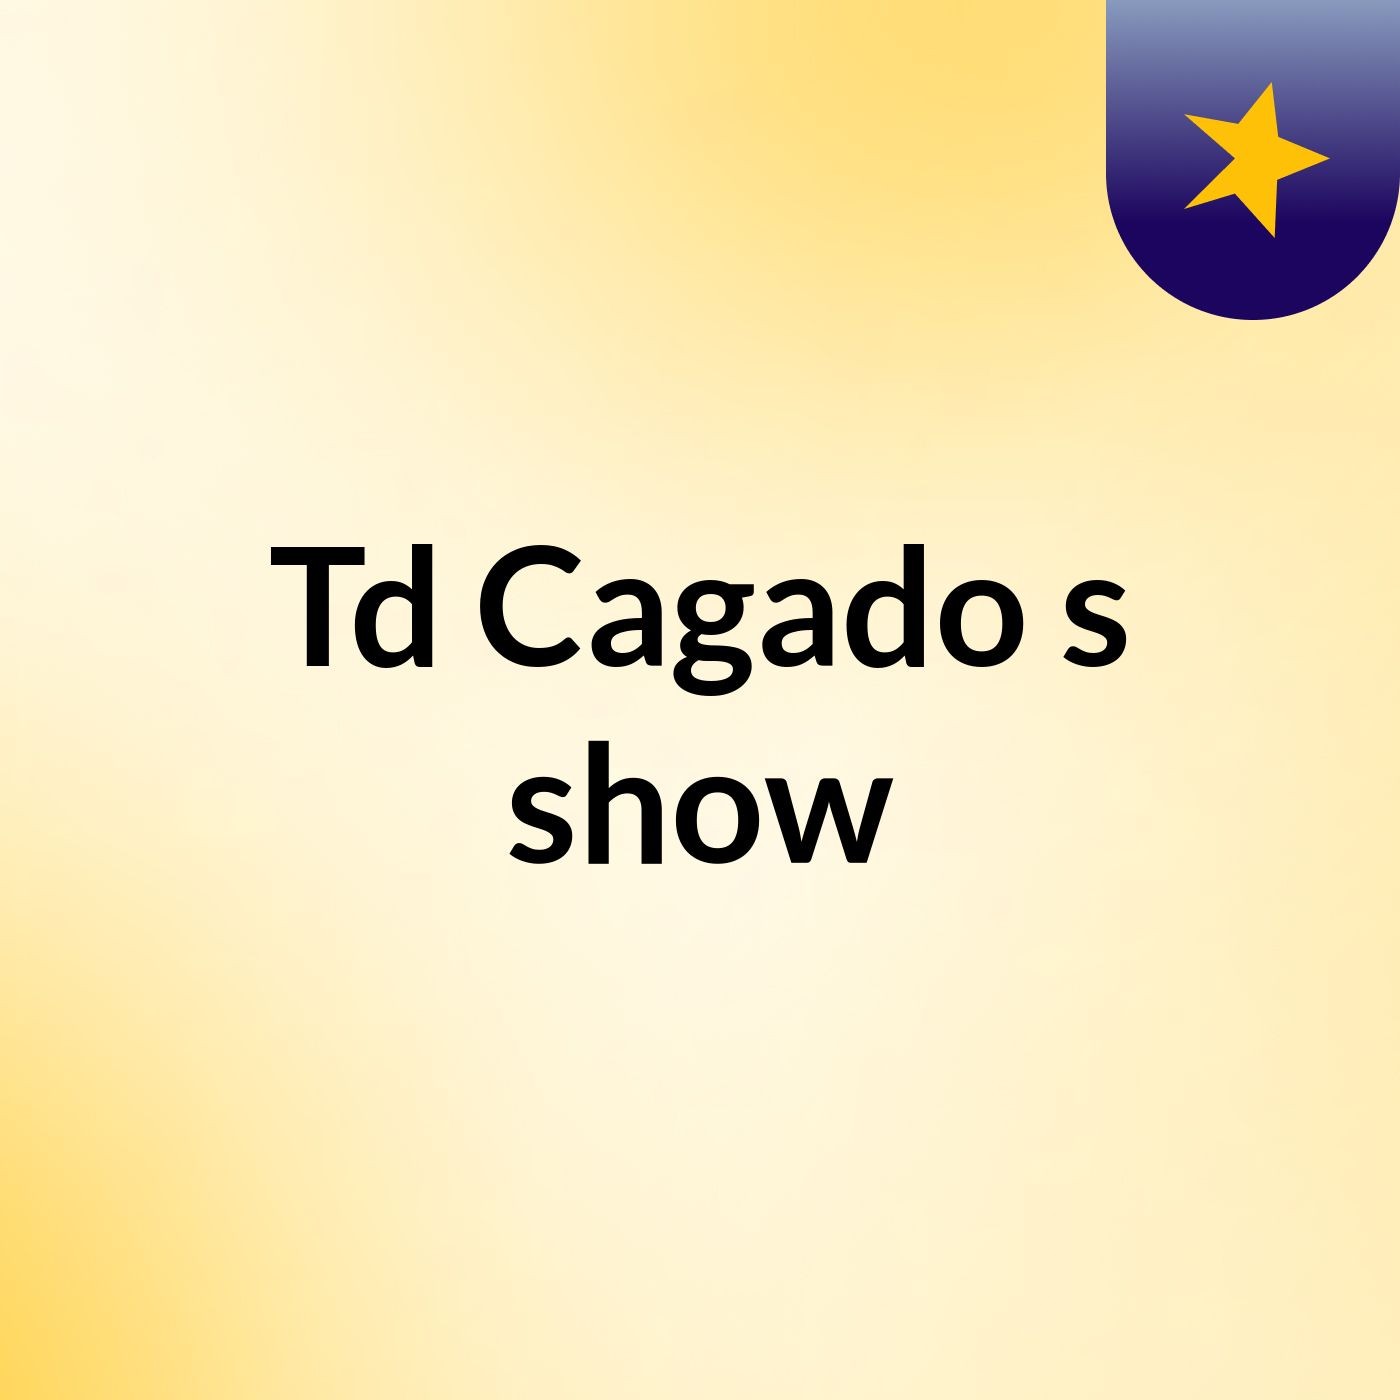 Td Cagado's show